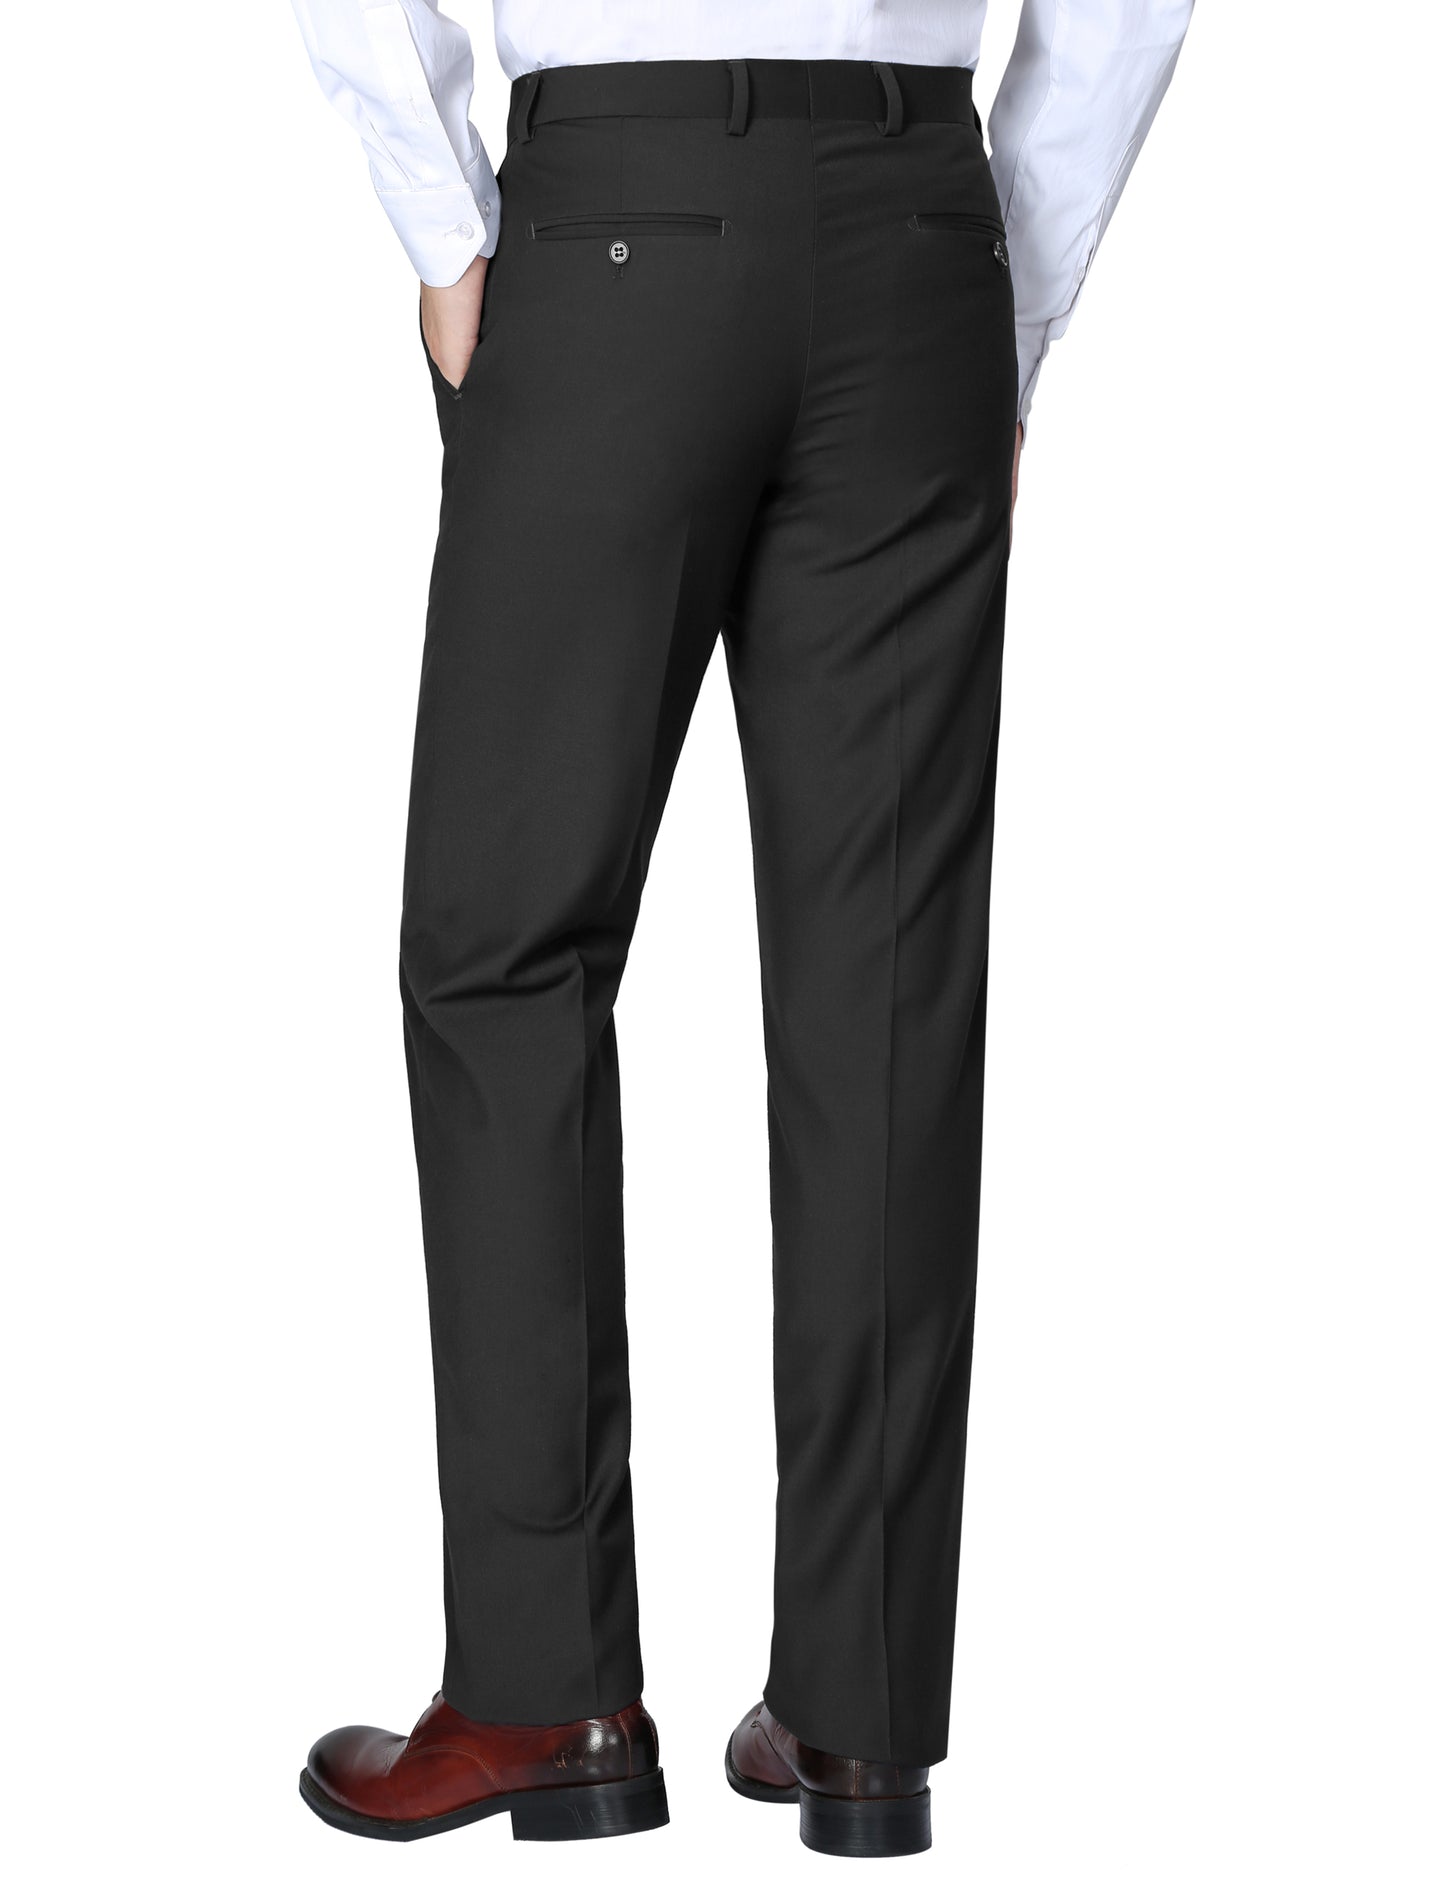 OMC Signature Men's Slim Fit Dress Pants (6 colors)